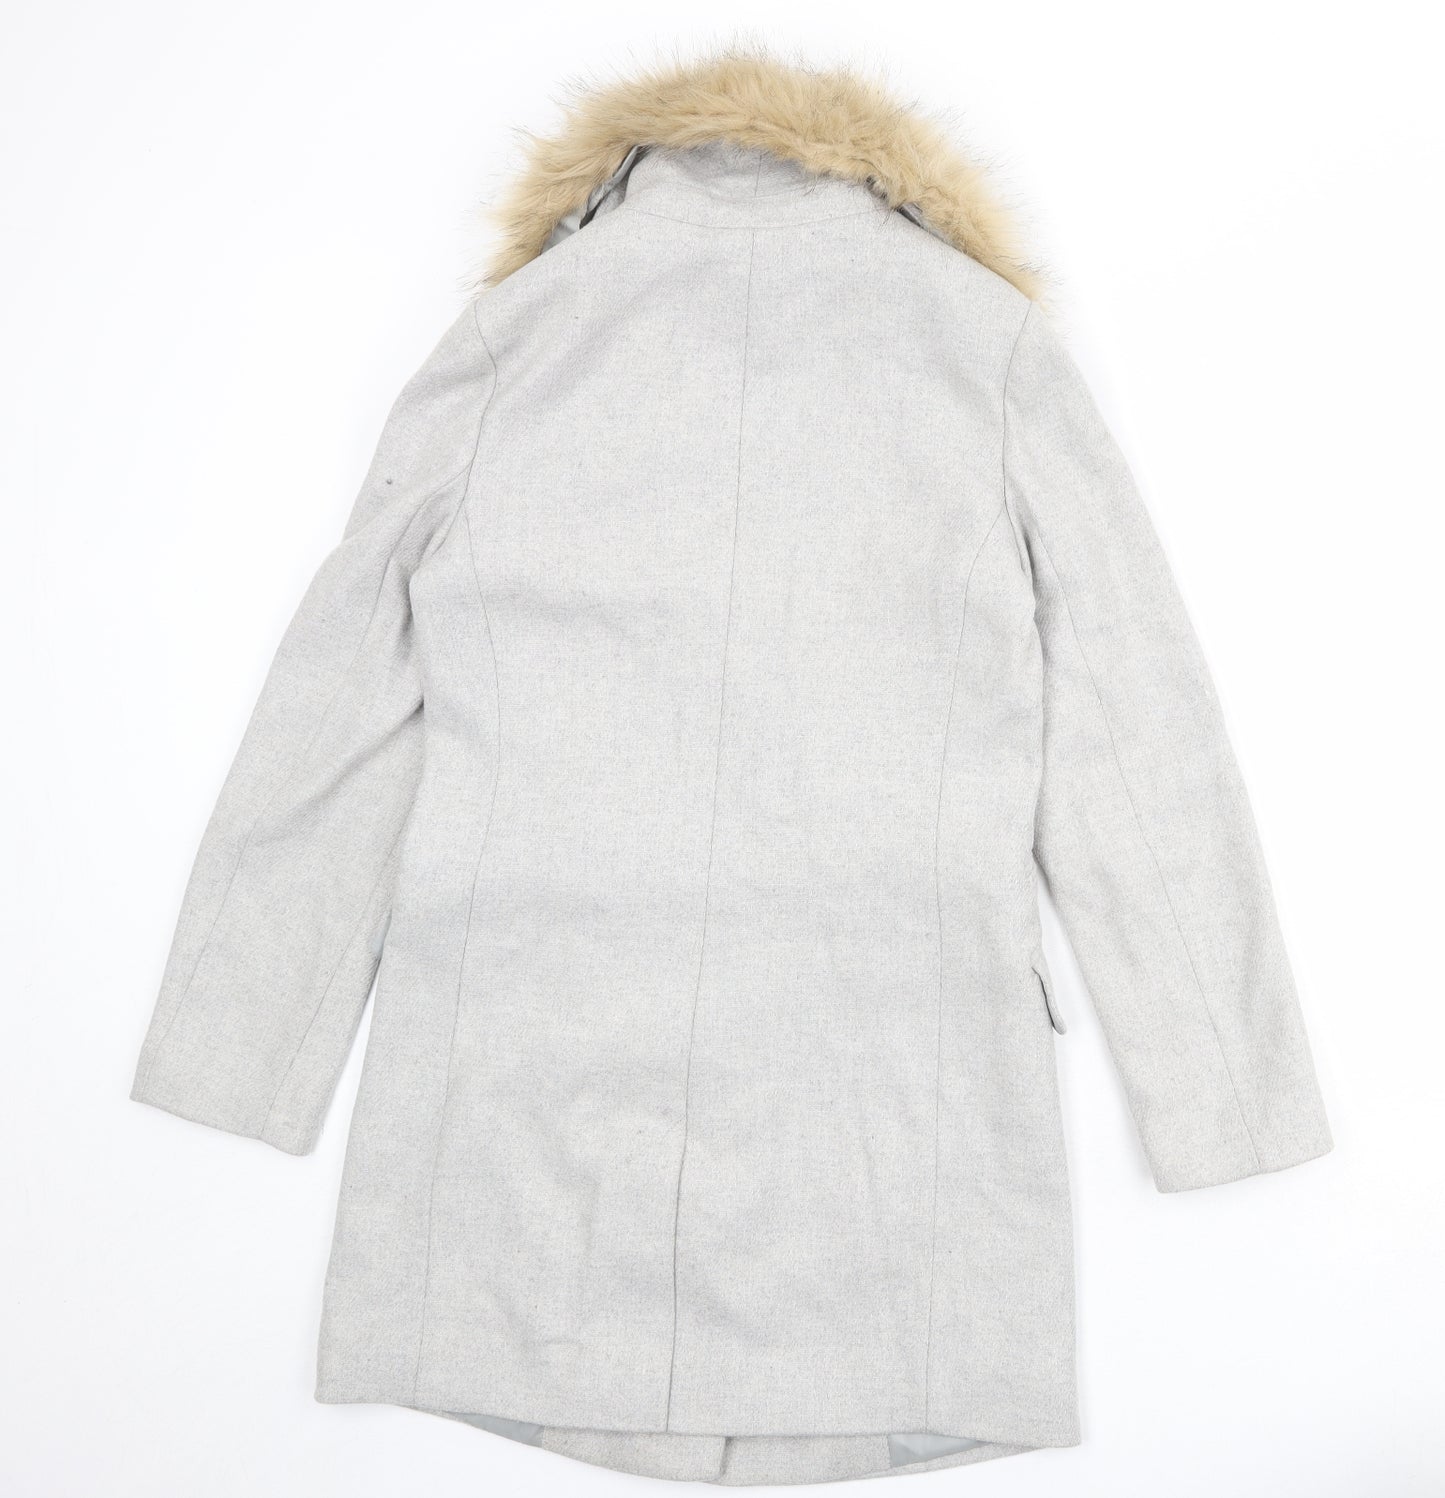 Topshop Womens Grey Overcoat Coat Size 8 Button